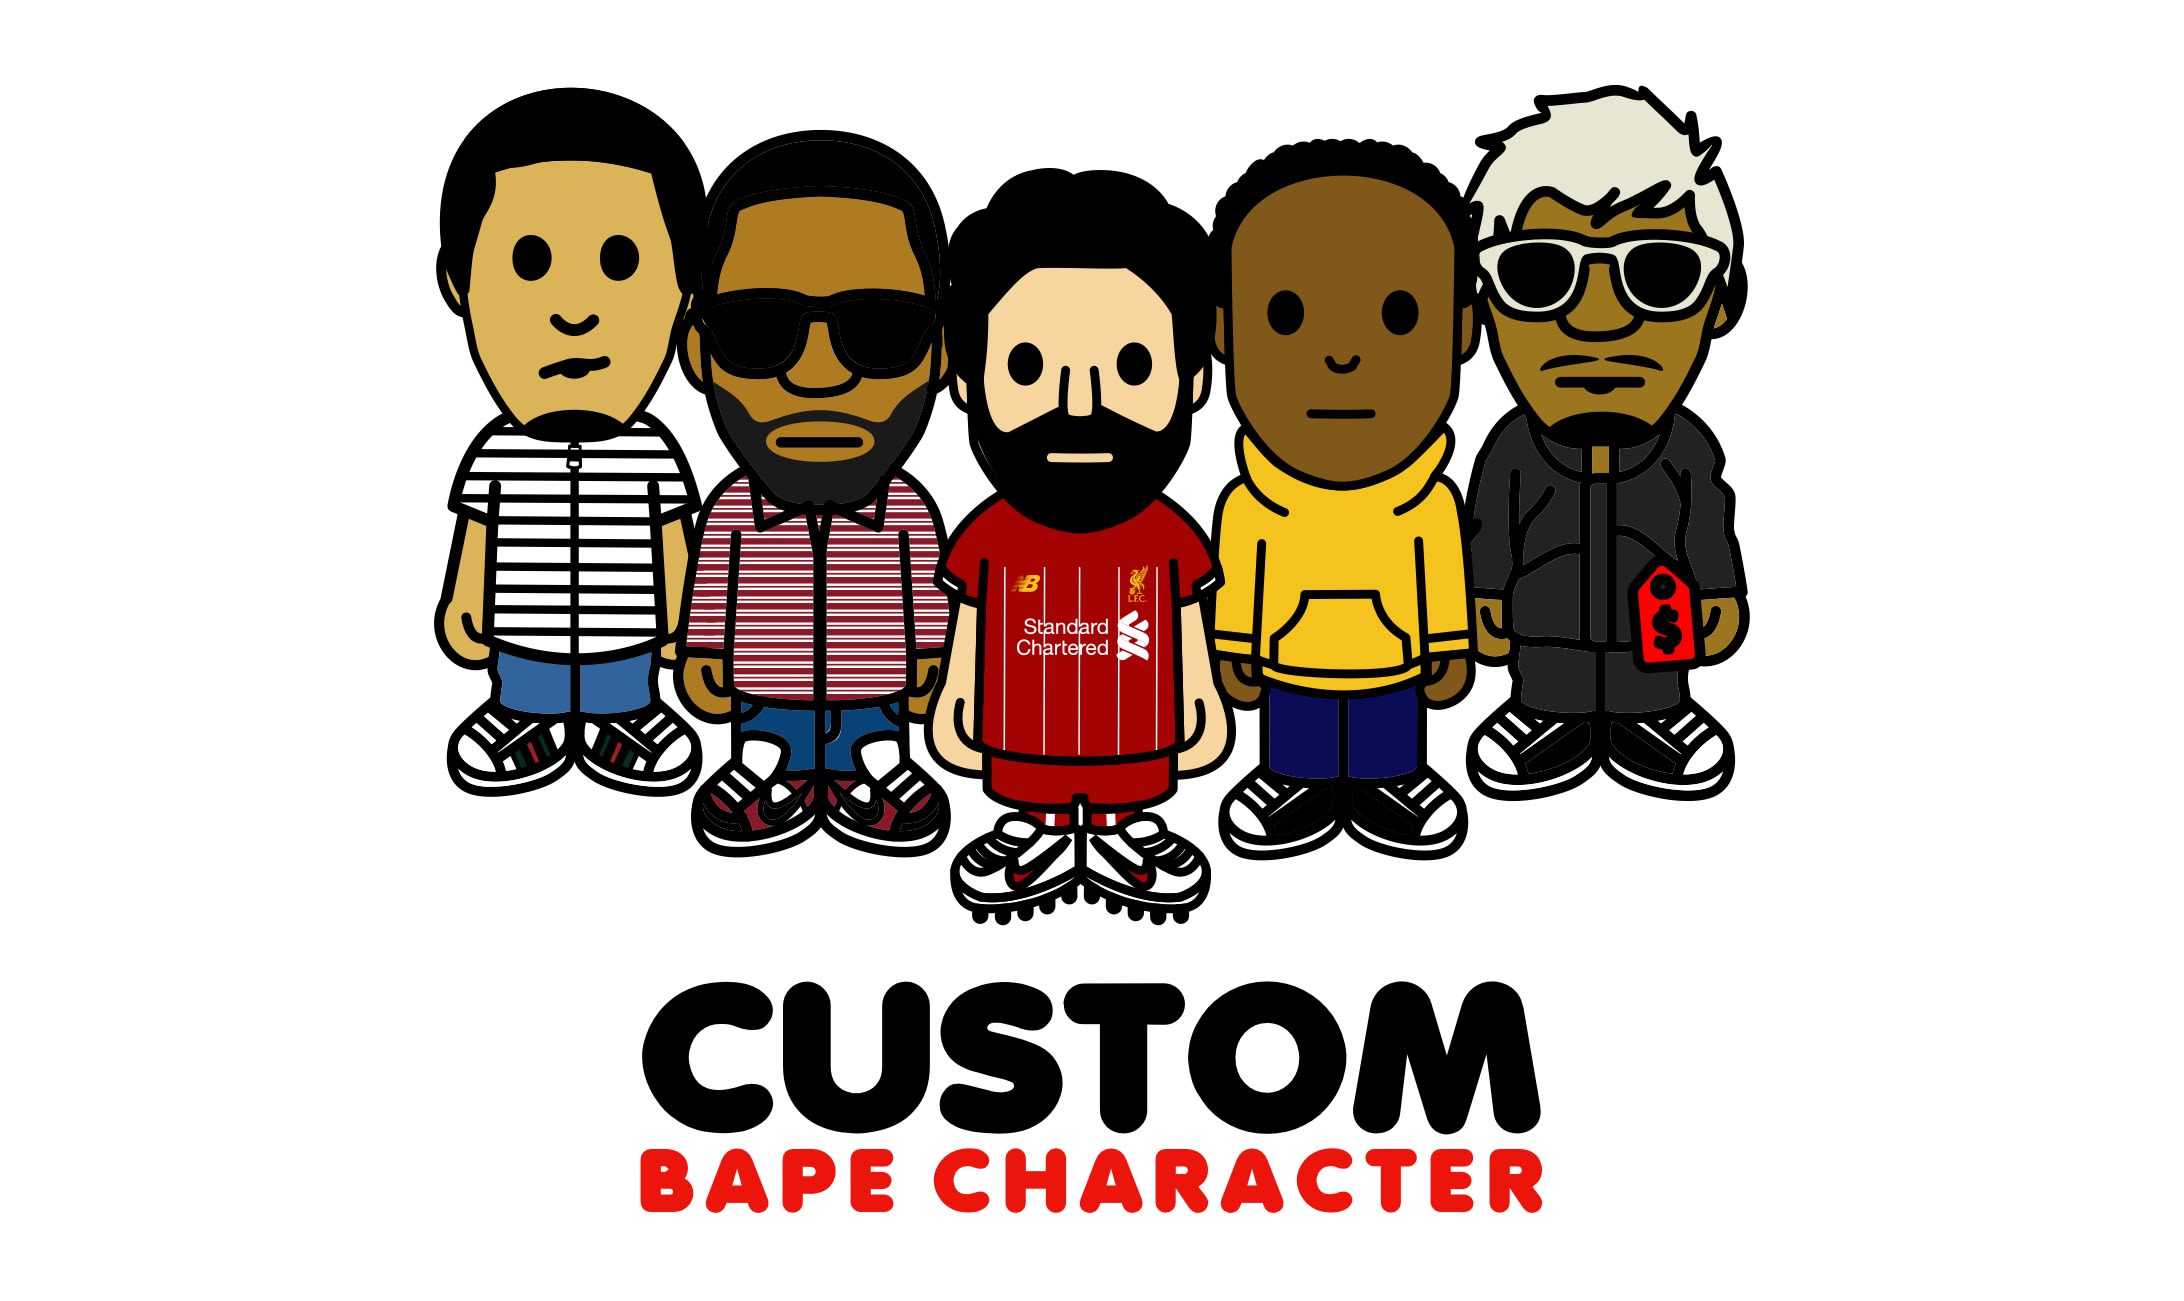 Bape character creator